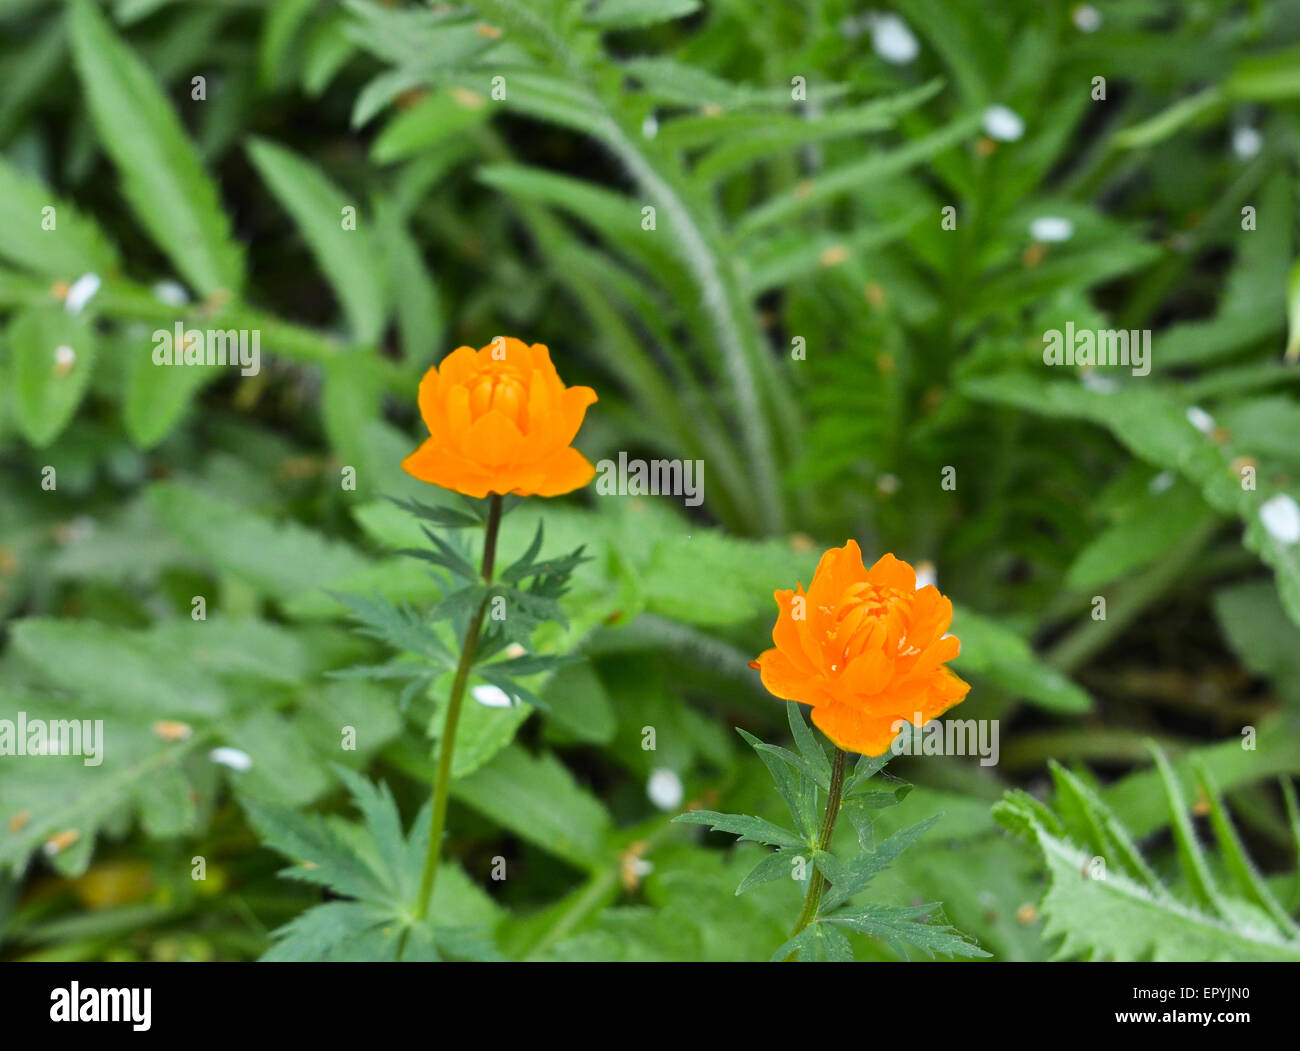 Trollius. May flowering garden flowers. Globe flower, or Trollius. Stock Photo